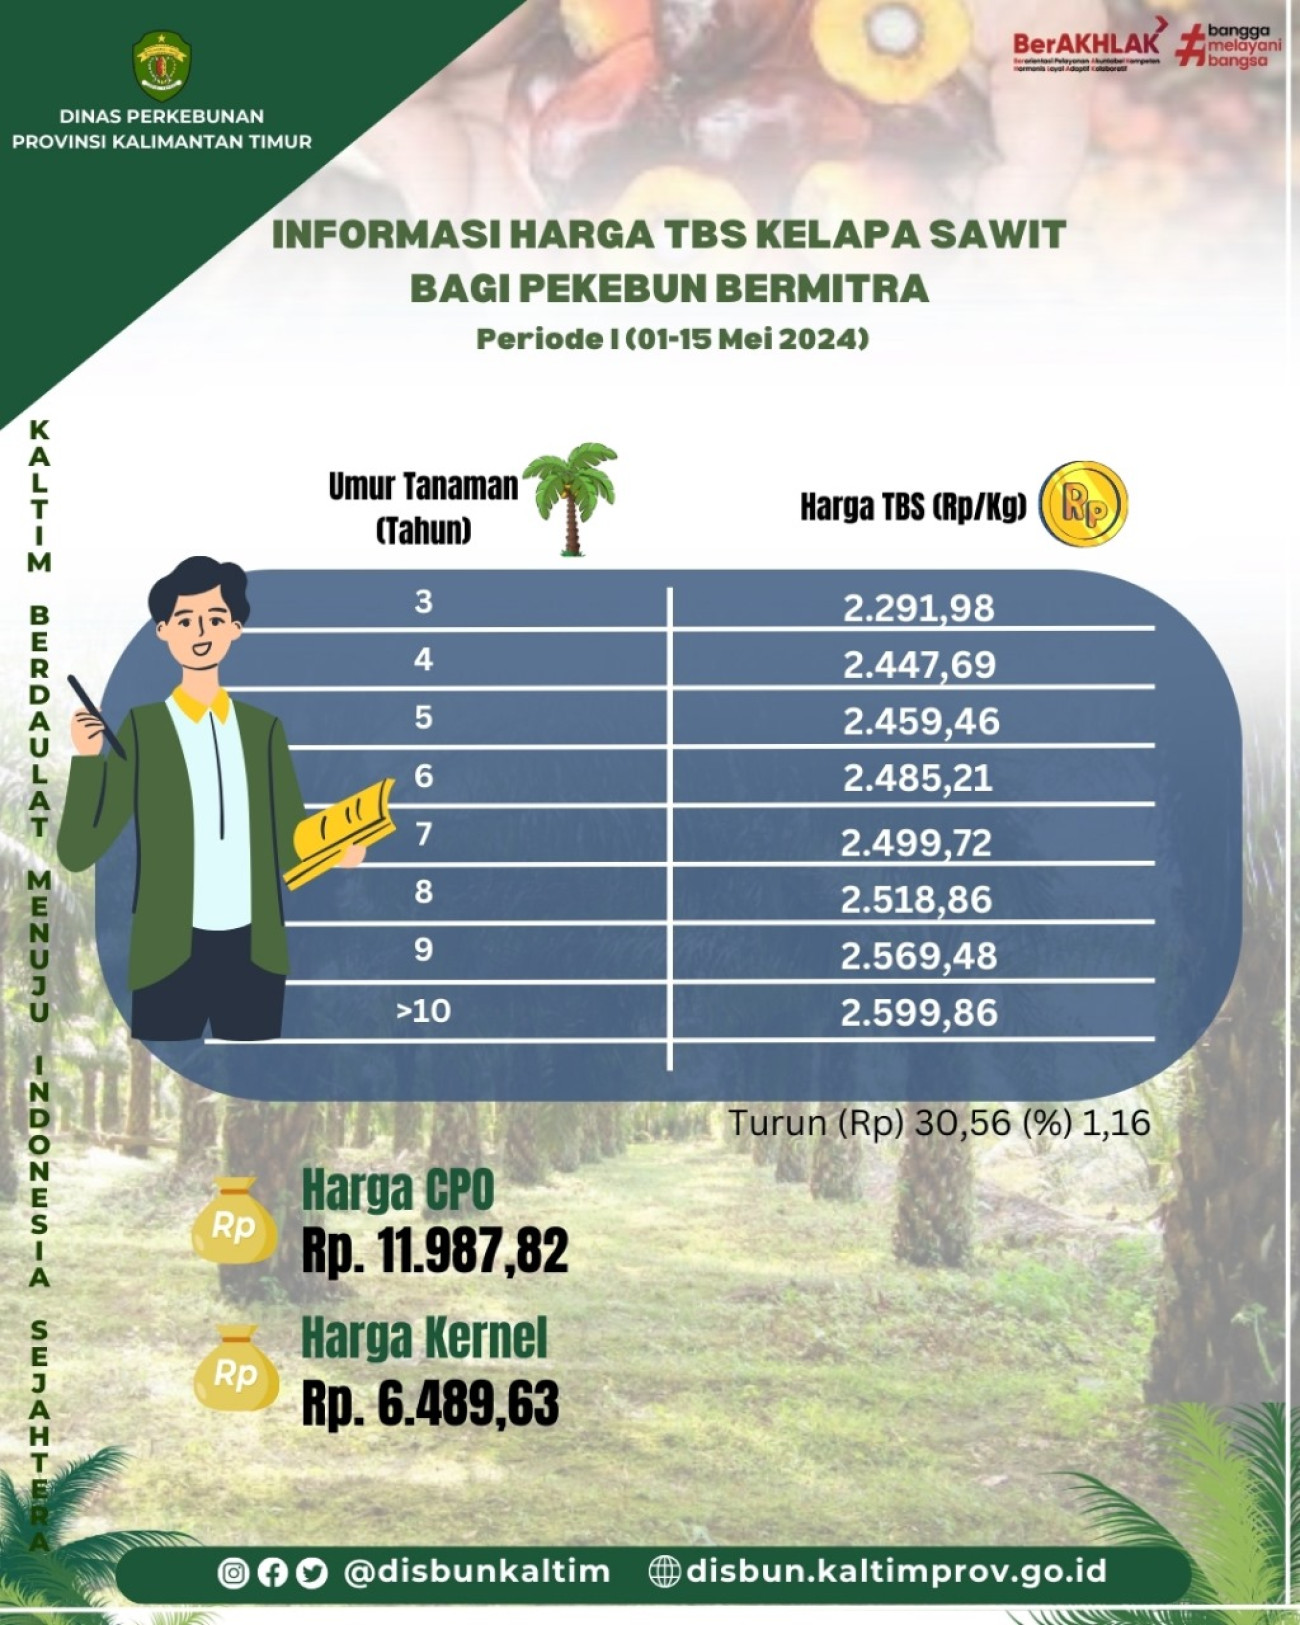 Informasi Harga TBS Kelapa Sawit bagi Pekebun Mitra Periode I Bulan Mei 2024